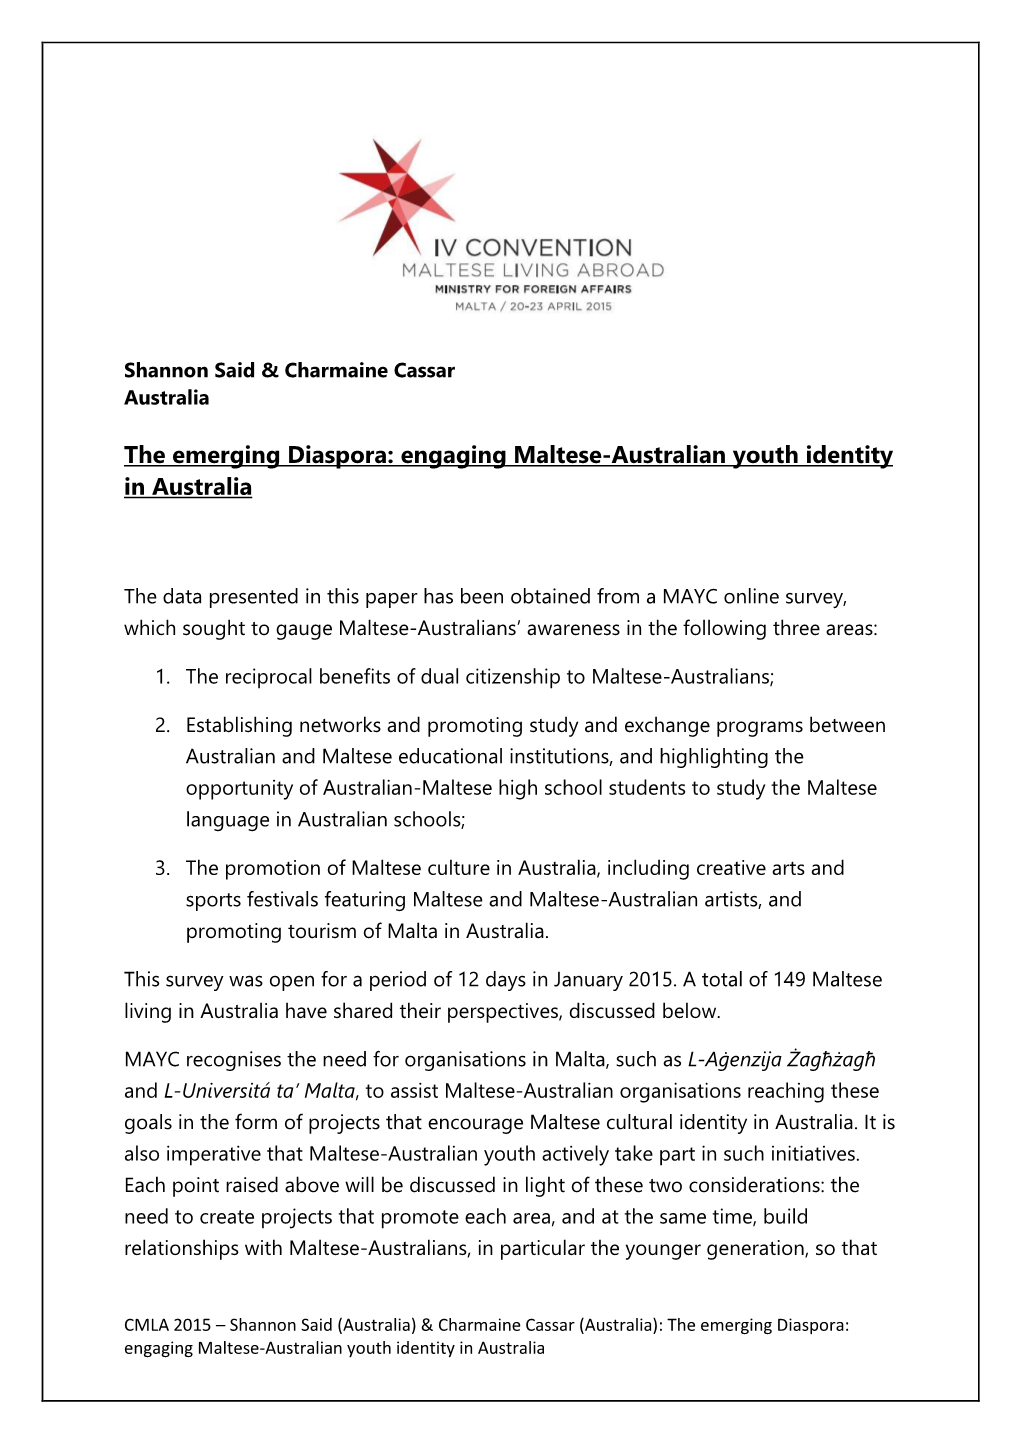 The Emerging Diaspora: Engaging Maltese-Australian Youth Identity in Australia